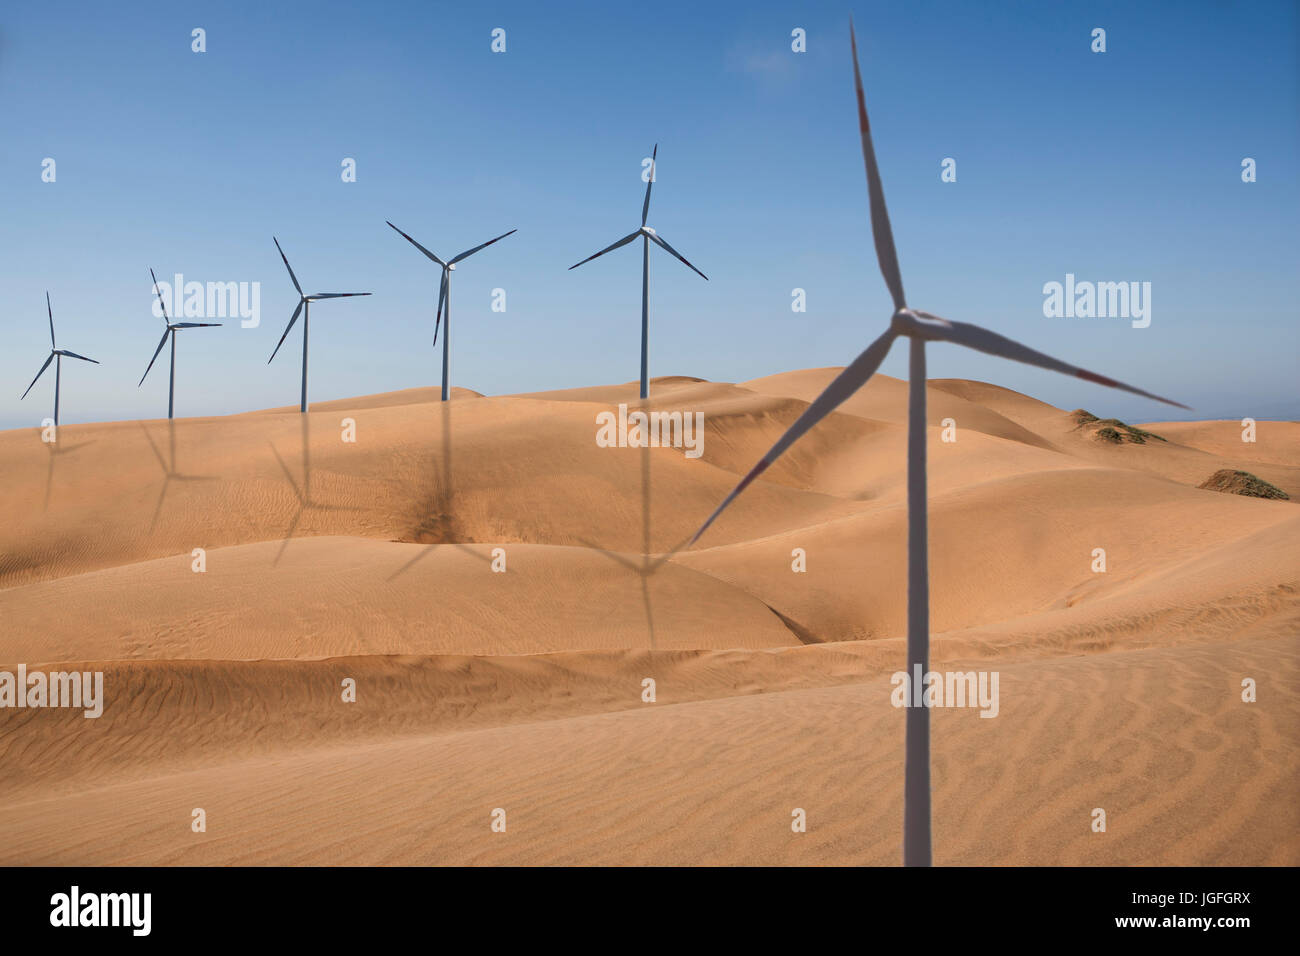 Row of wind turbines in desert Stock Photo